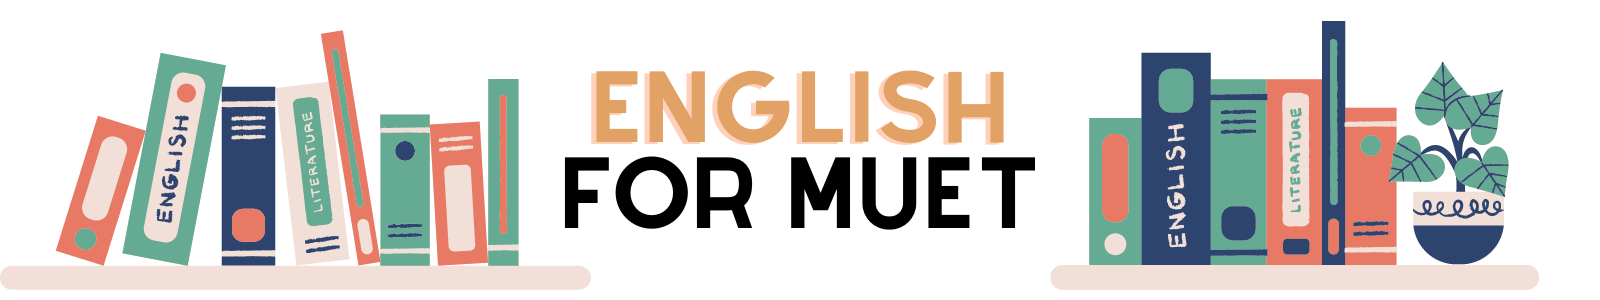 RMP01903 - ENGLISH FOR MALAYSIAN UNIVERSITY ENGLISH TEST (MUET)